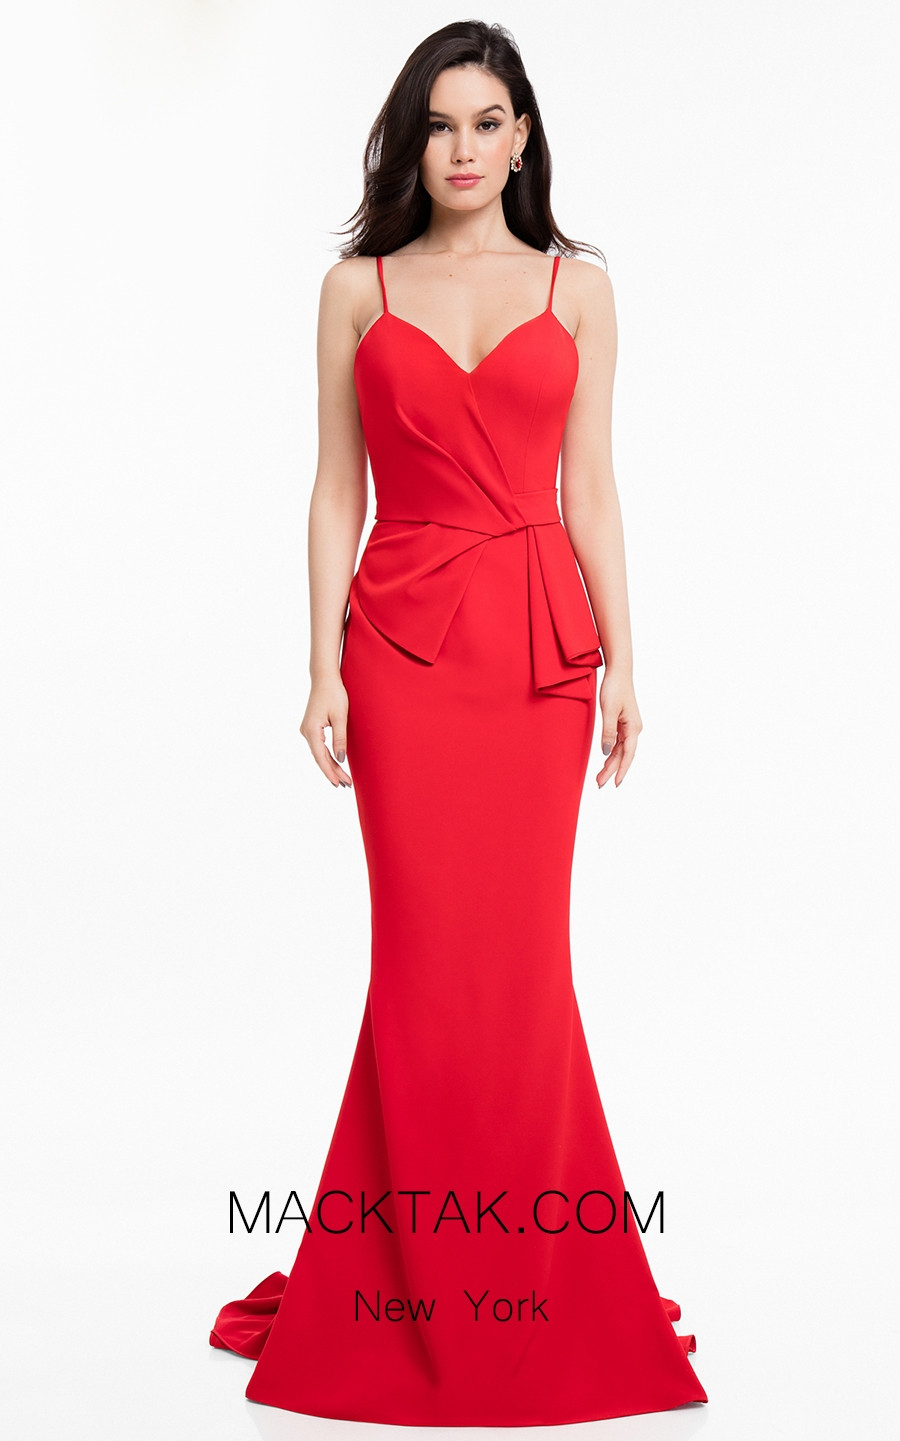 Terani 1821E7166 Red Front Dress